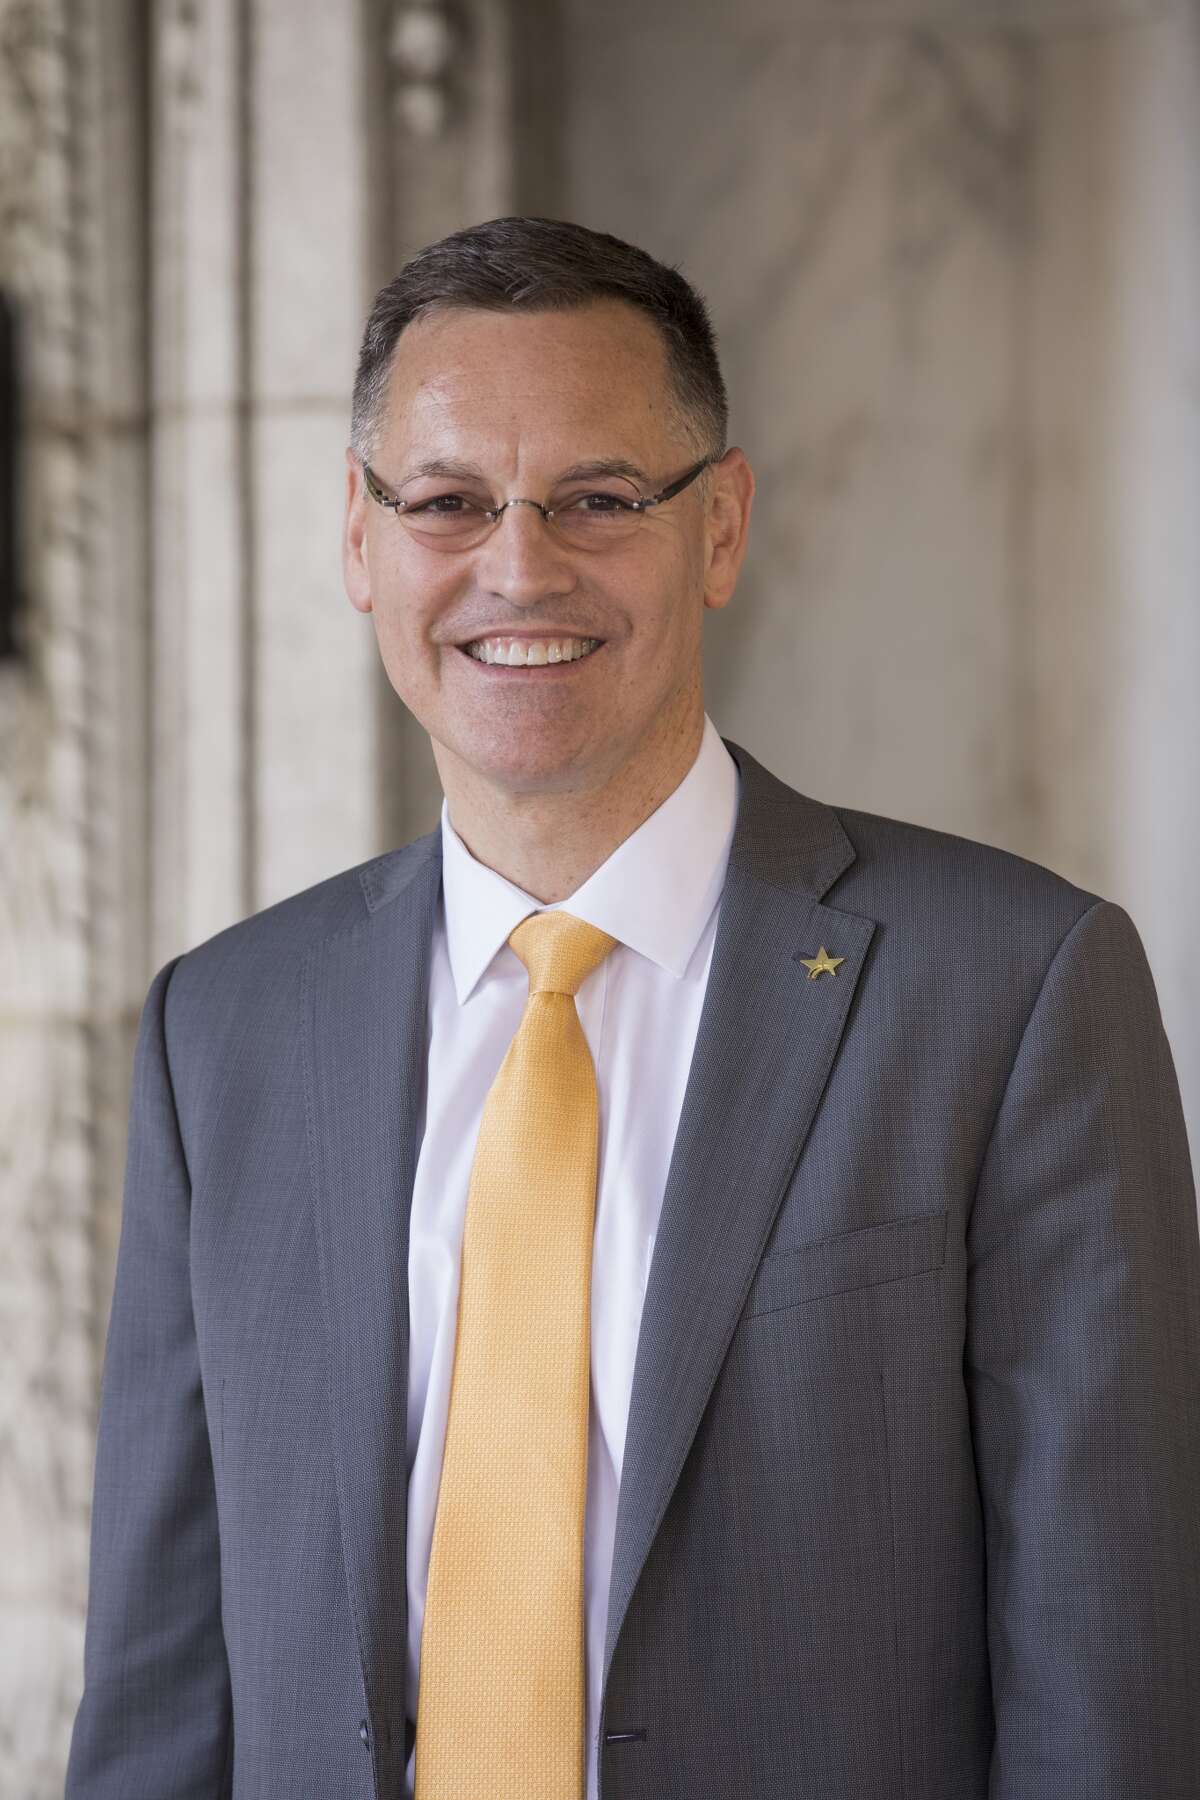 Richard Ludwick is president of the University of St. Thomas in Houston.